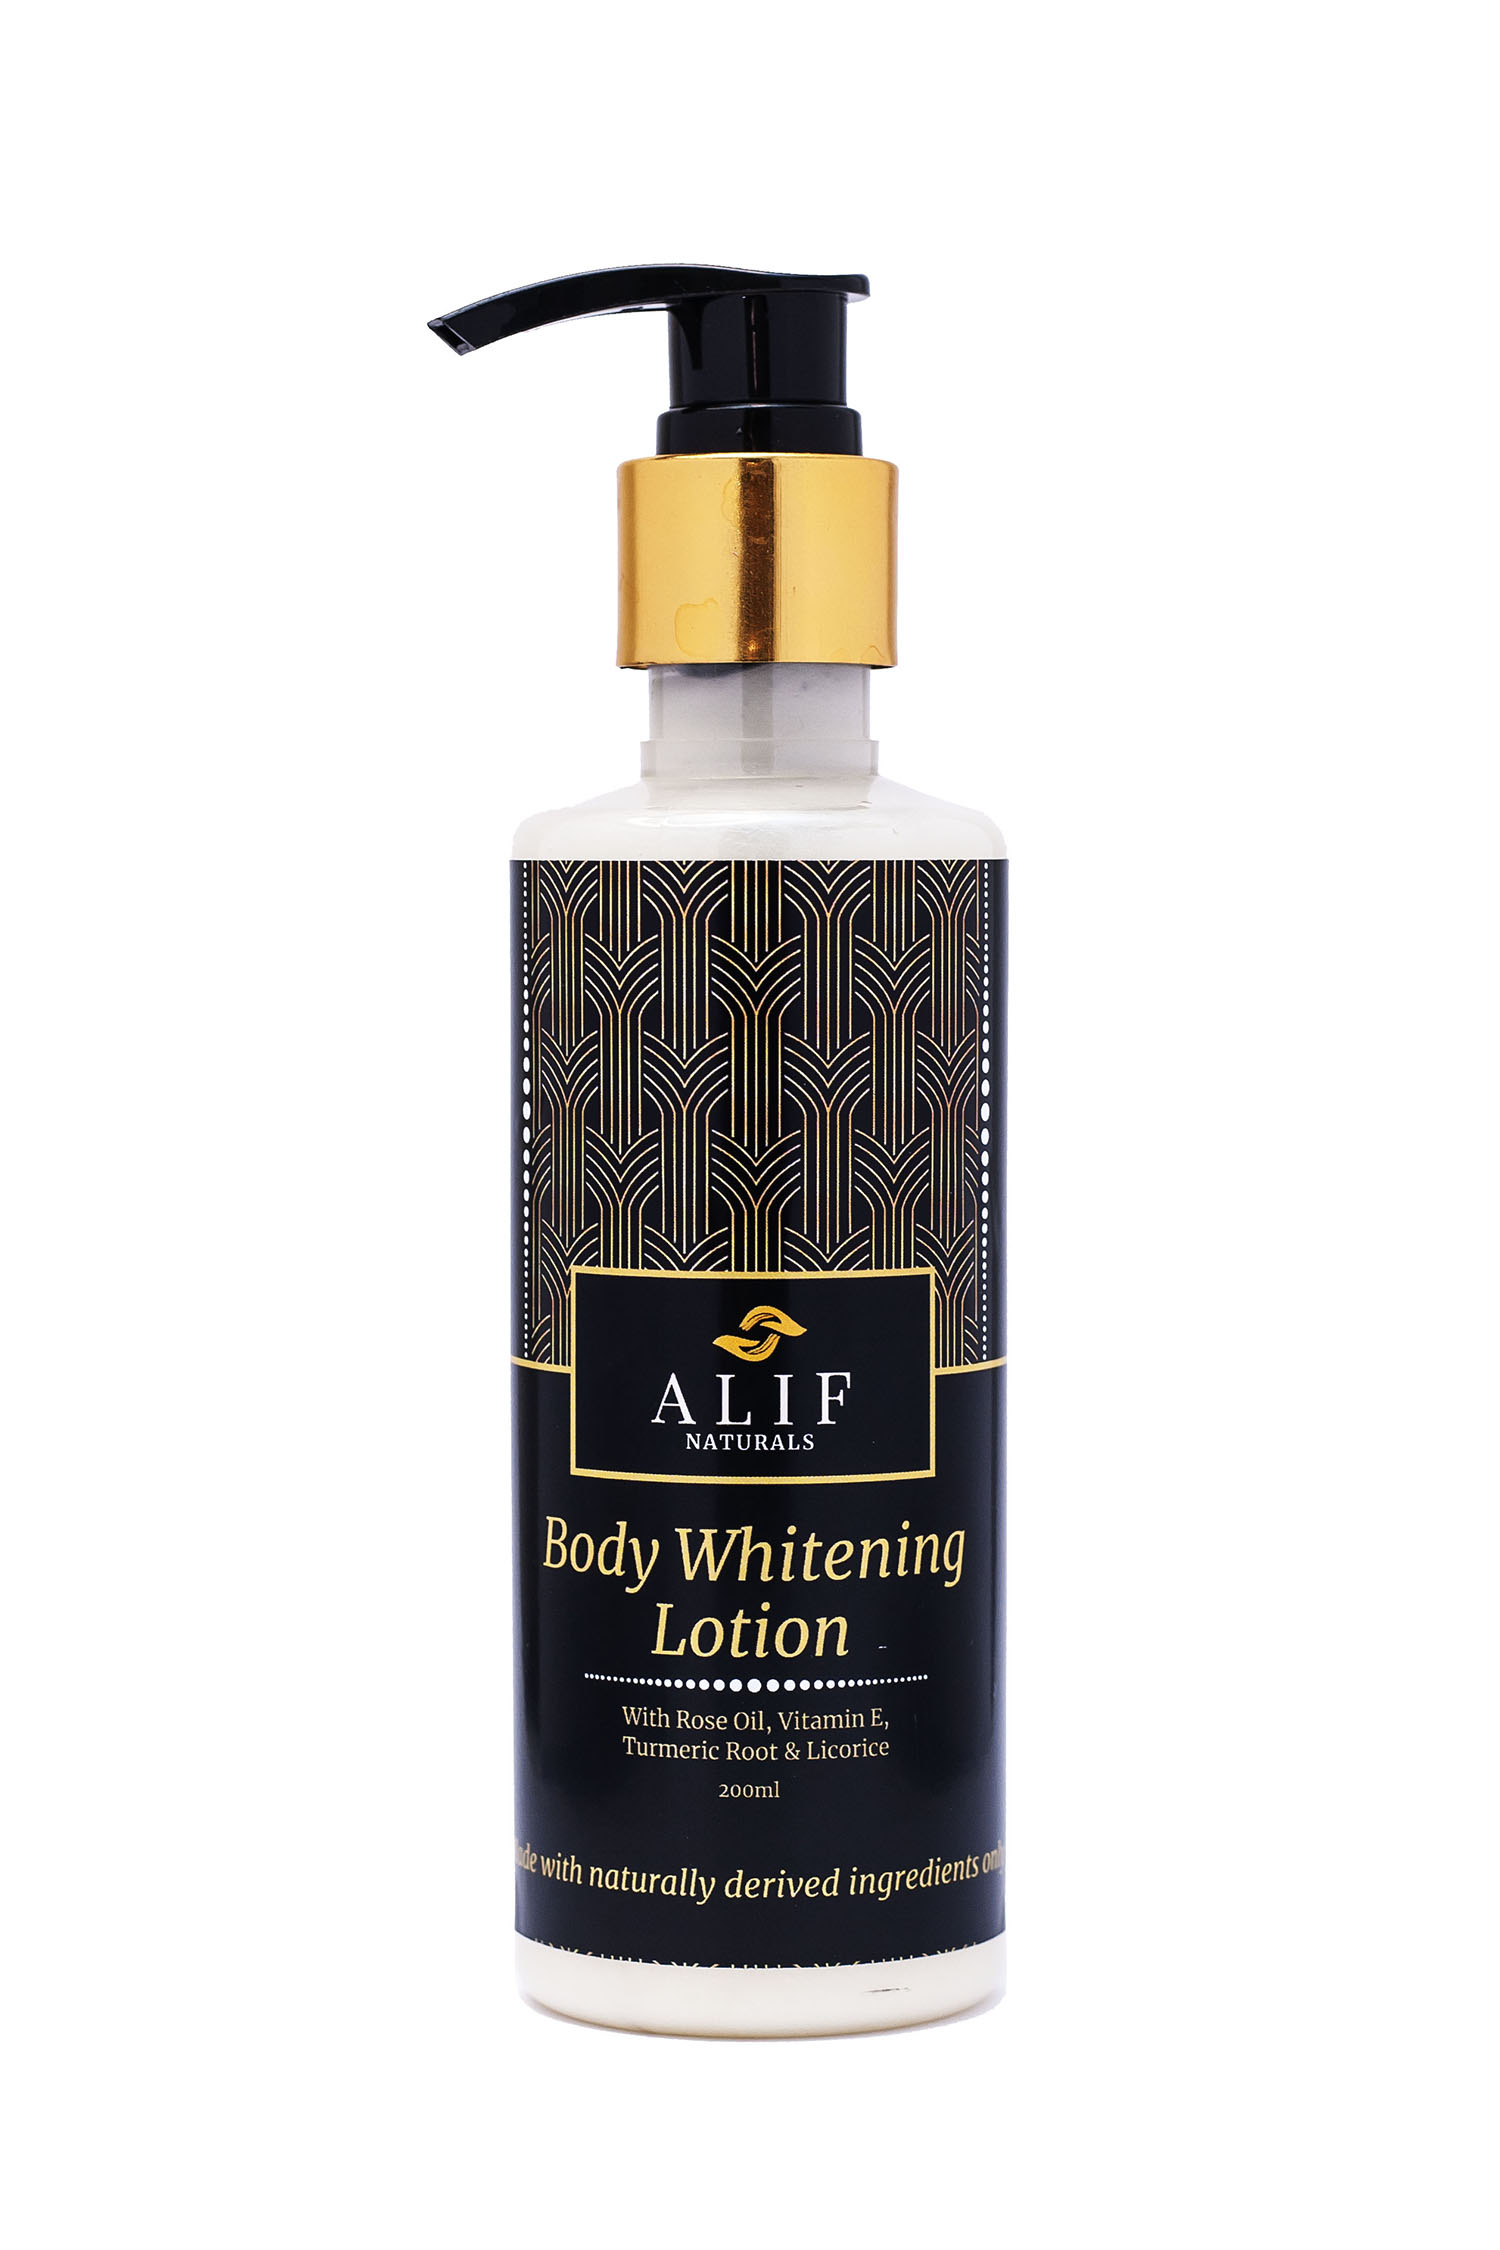 Body whitening lotion